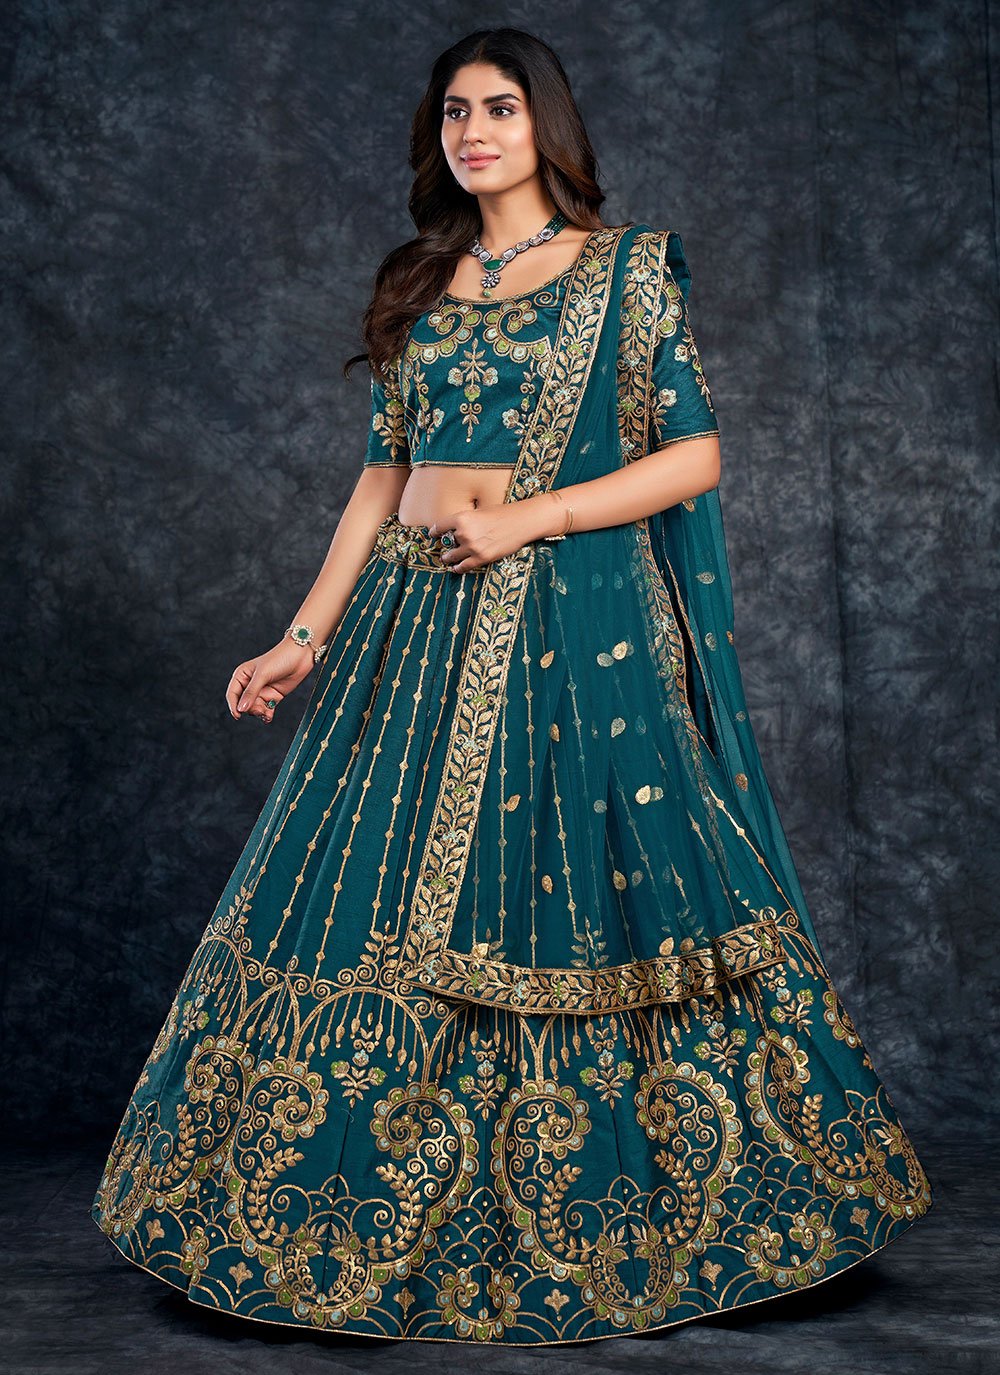 Royal Blue Lehenga Choli Ready to Wear Indian Traditional Bridal Wedding  Partywear Dress Ghaghara Choli Readymade Bridesmaid Dress, RR-297 - Etsy